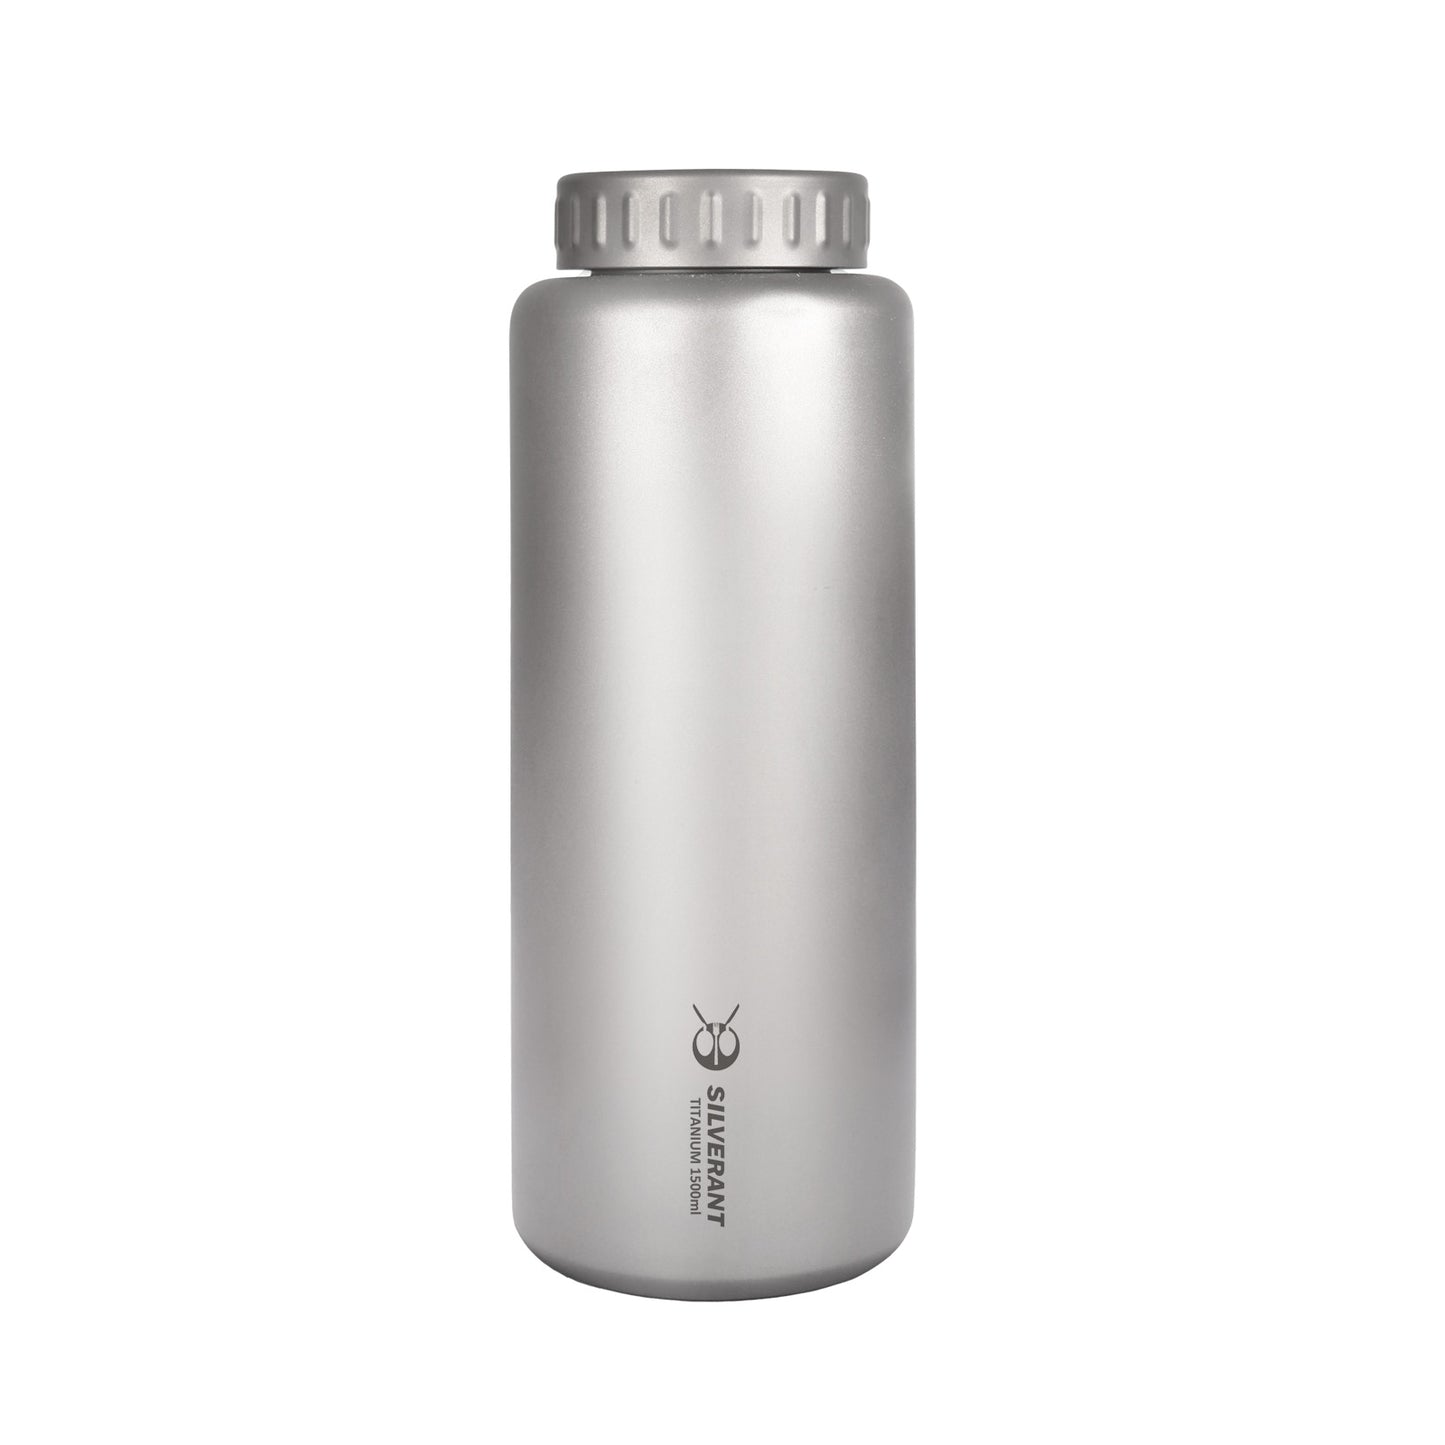 Ultralight Titanium Water Bottle 800ml/28.16 fl oz - Slim